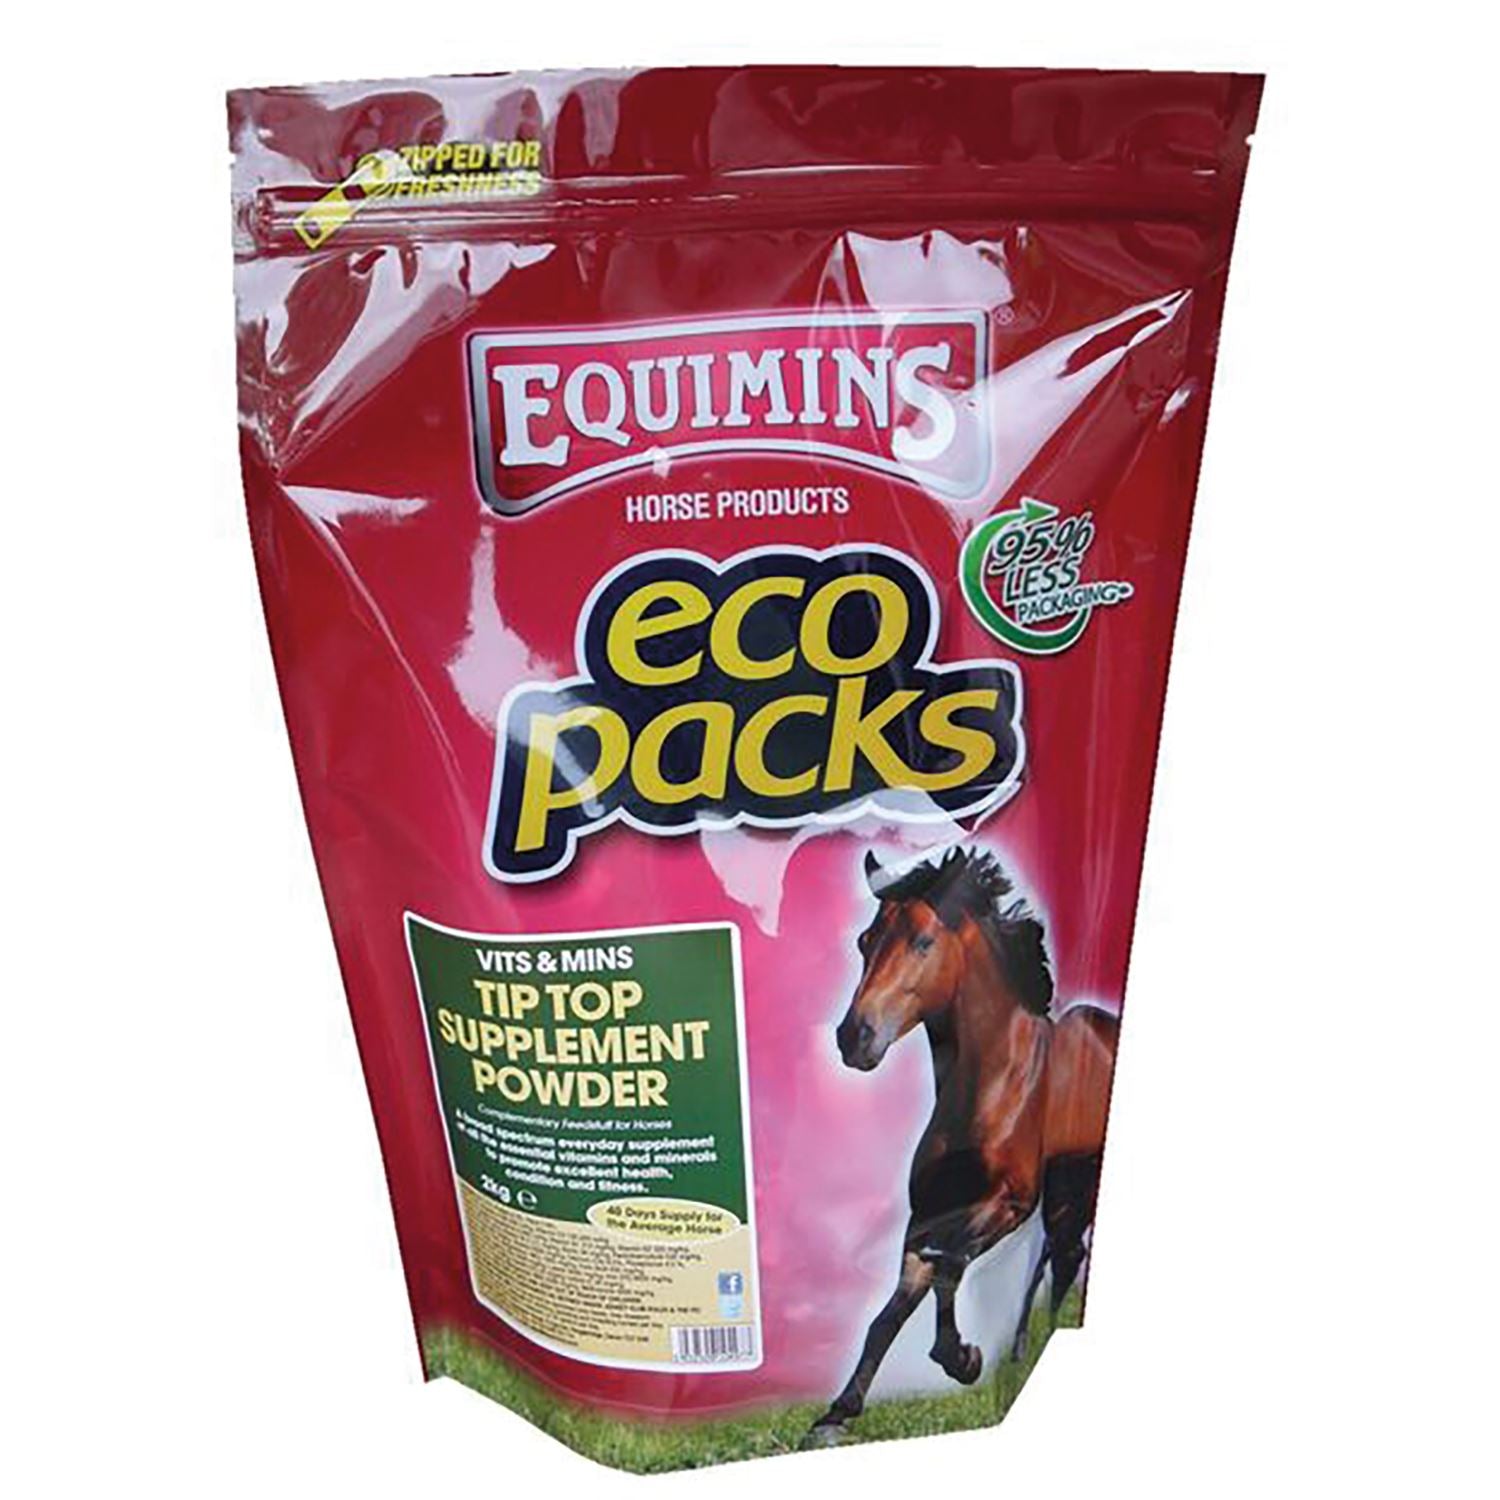 Equimins Tip Top Supplement Powder: Superior Formulation for Horse Health